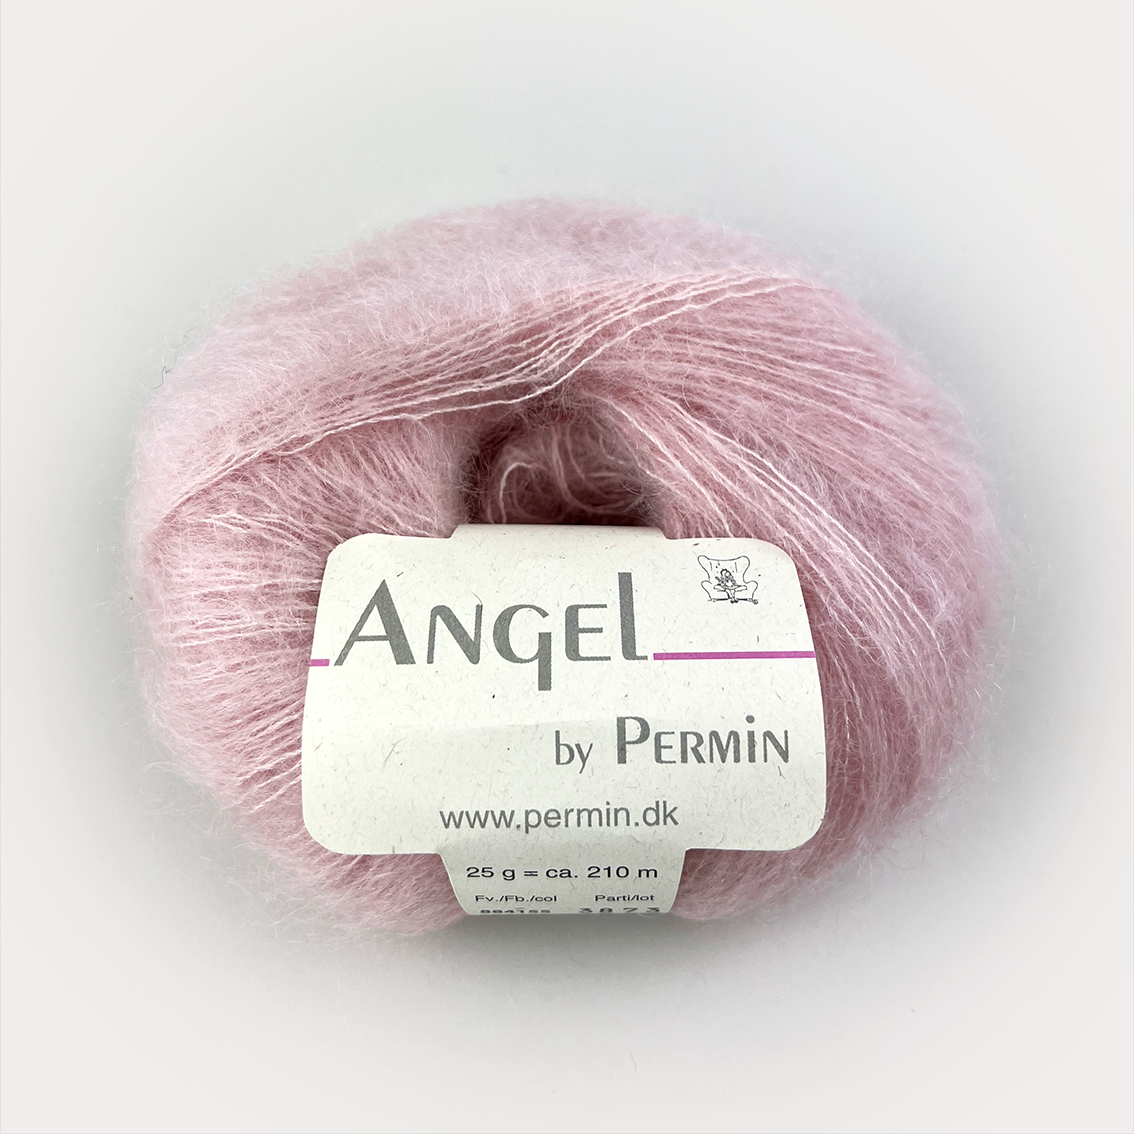 Angel | by Permin